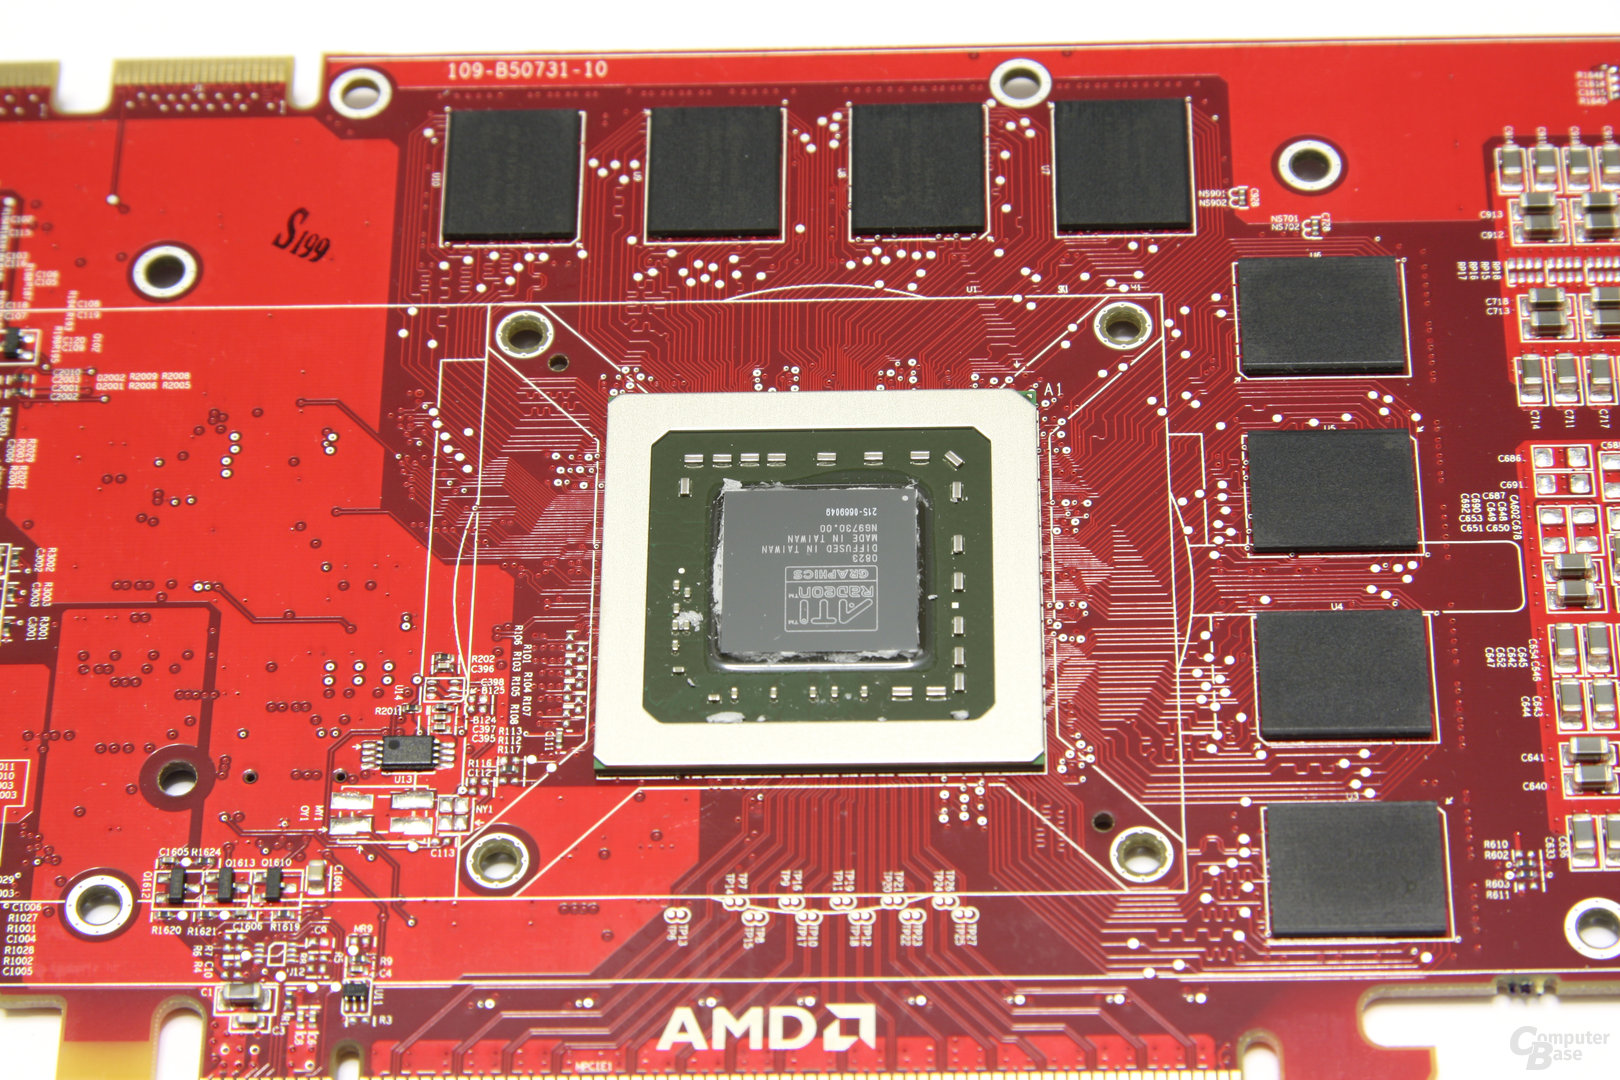 PowerColor Radeon HD 4870 GPU und Speicher